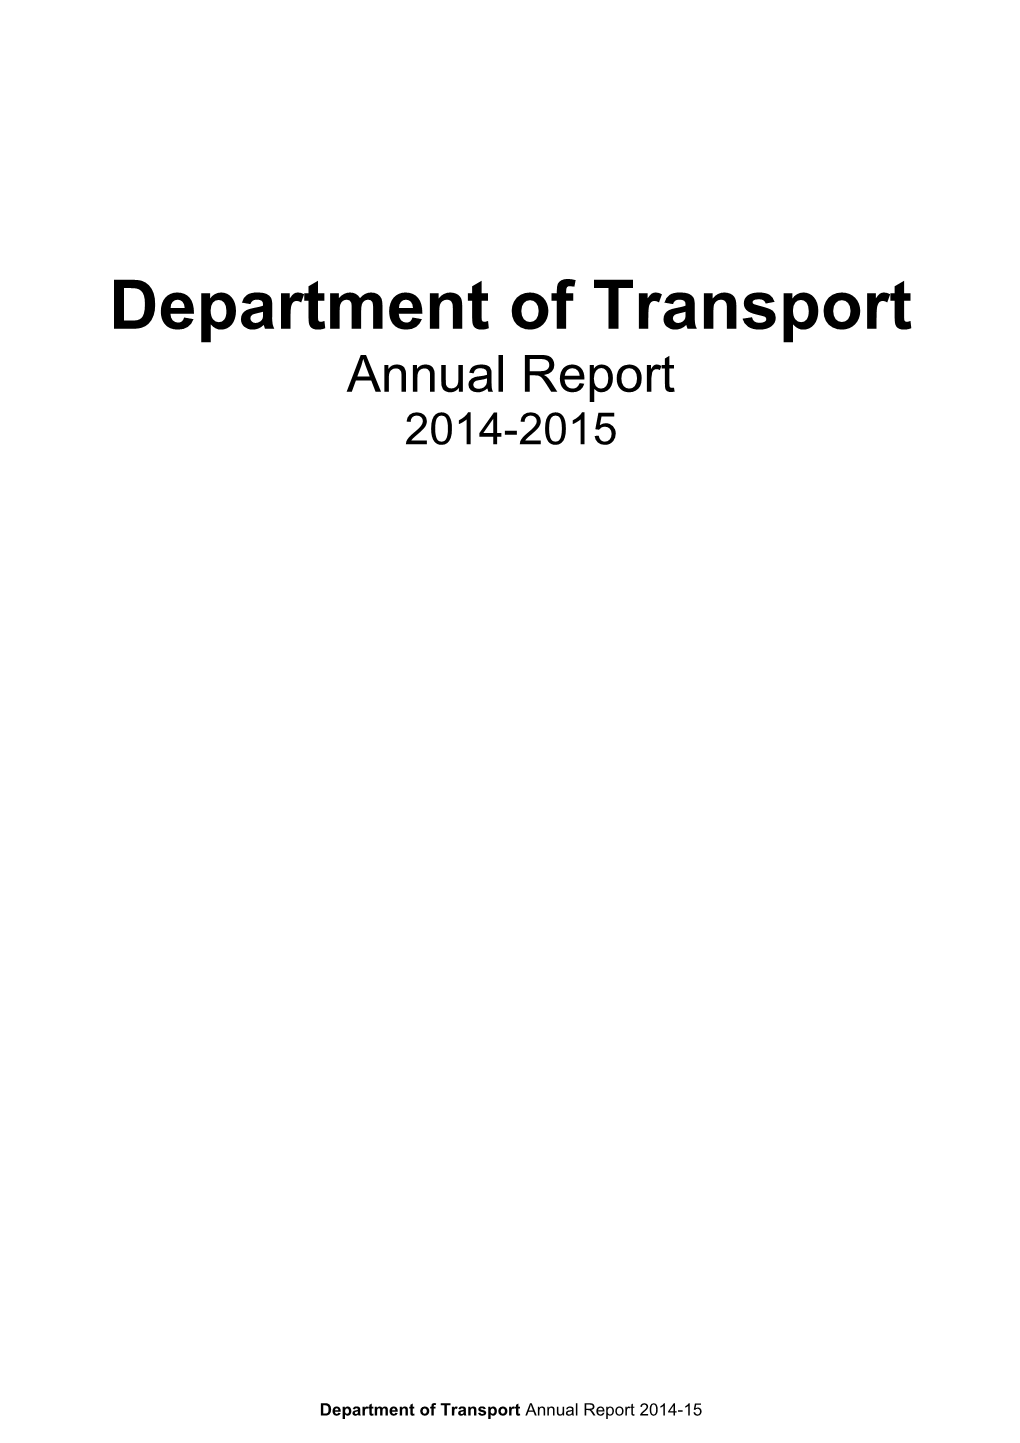 DOT Annual Report 2015